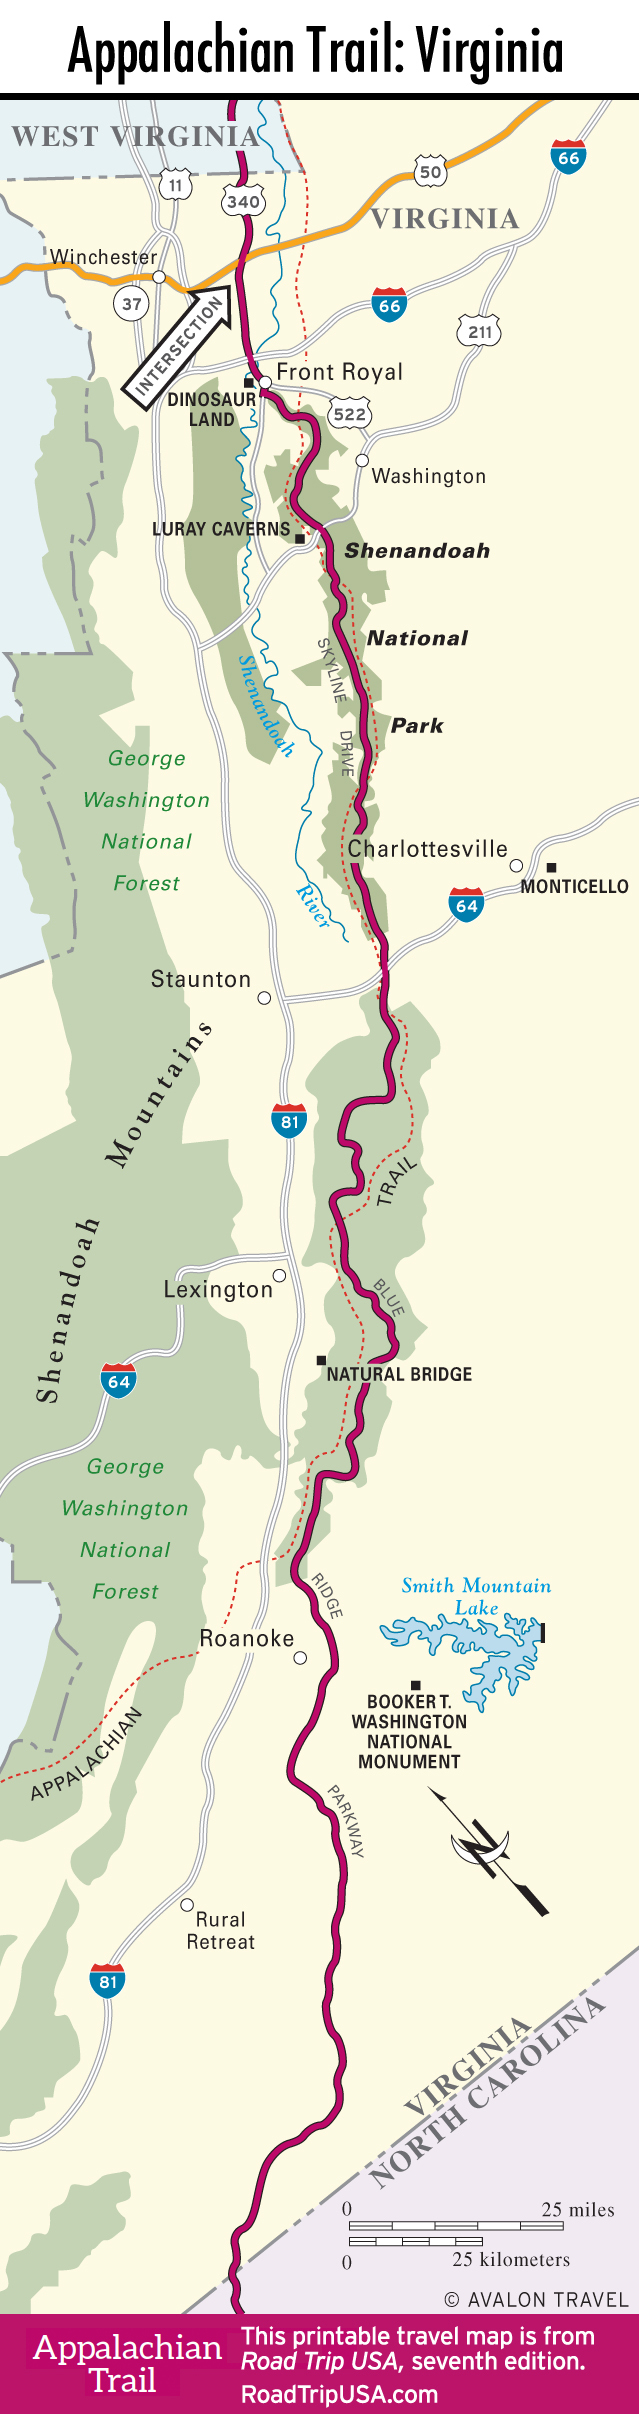 Virginia Appalachian Trail Map